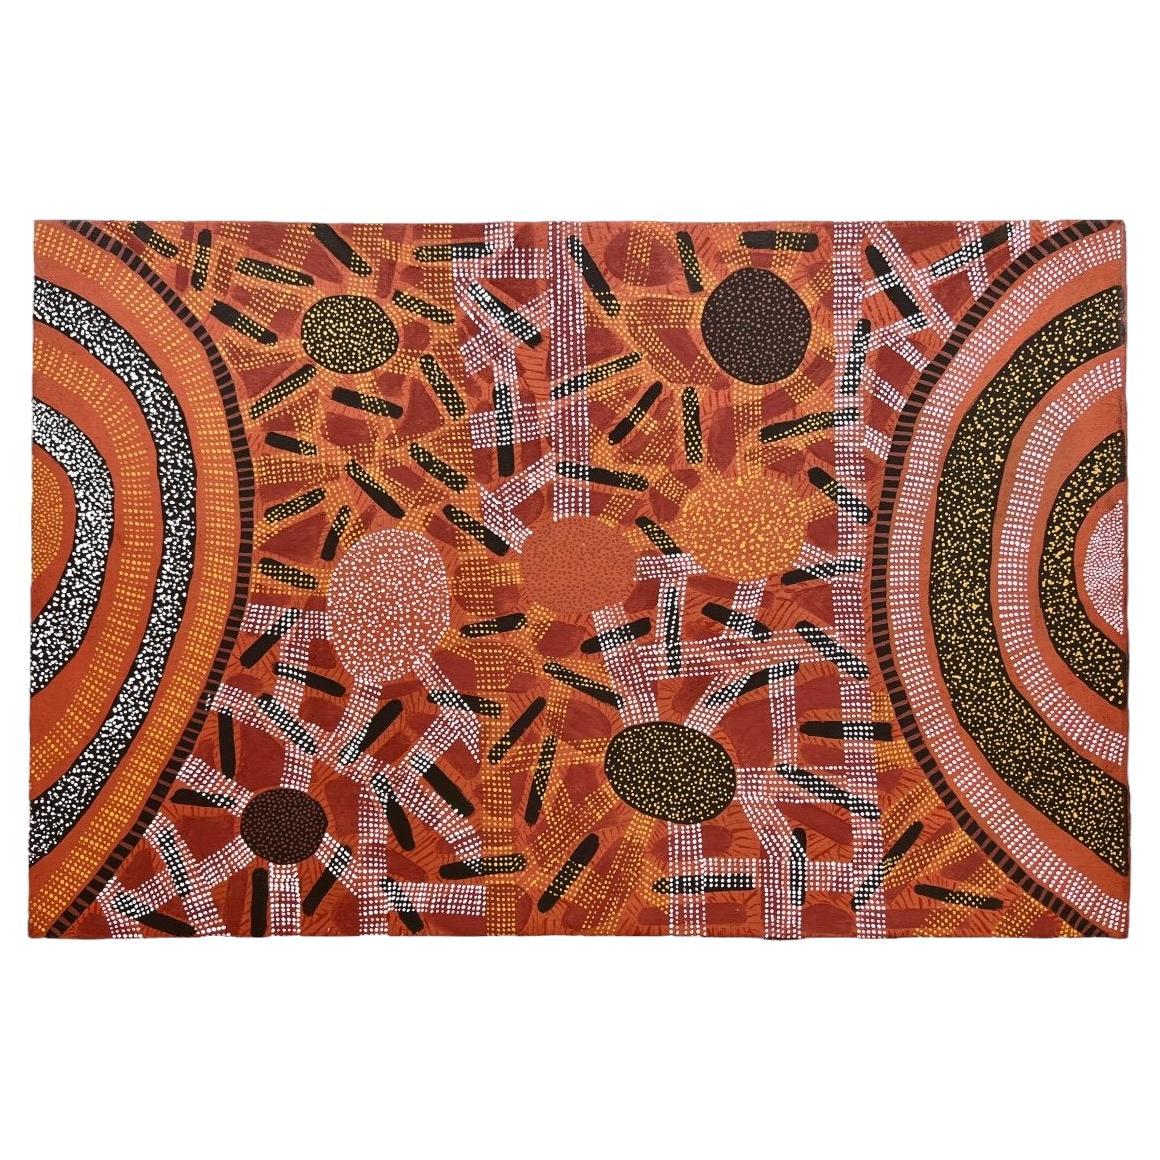 Aboriginal Painting 'Kuluma in Tiwi Islands' by Nina Puruntatameri (1971-) For Sale